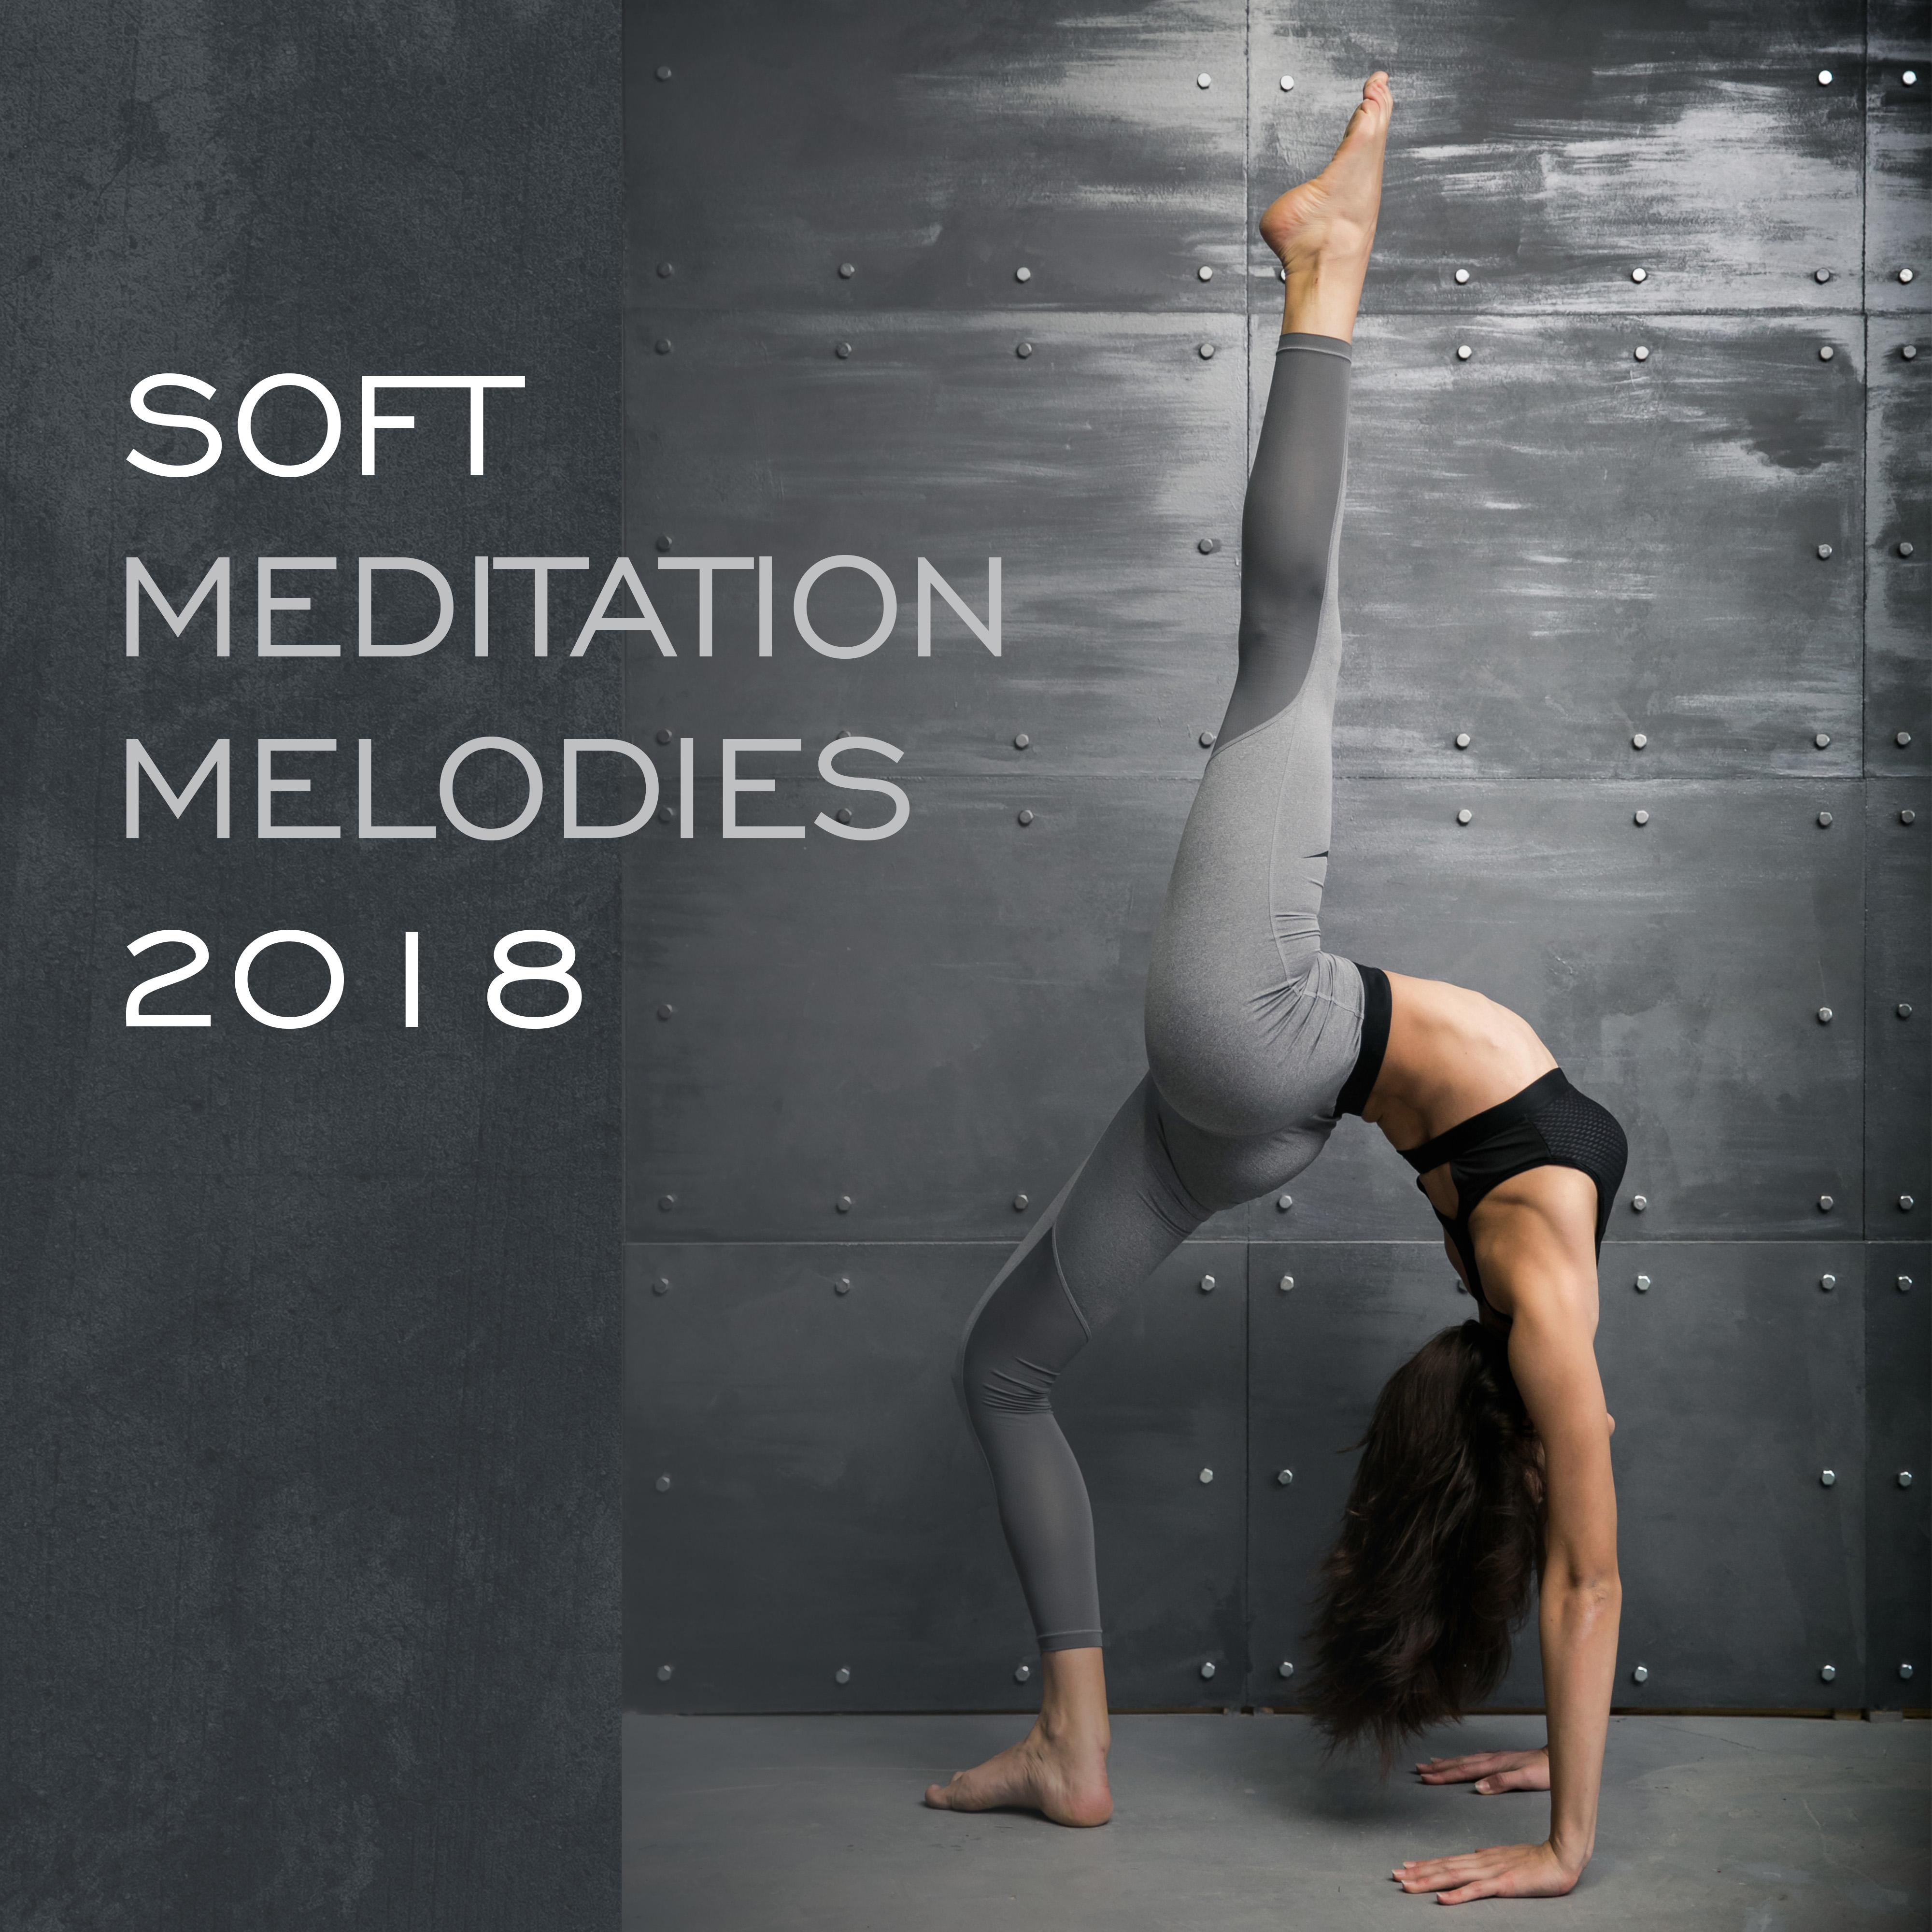 Soft Meditation Melodies 2018